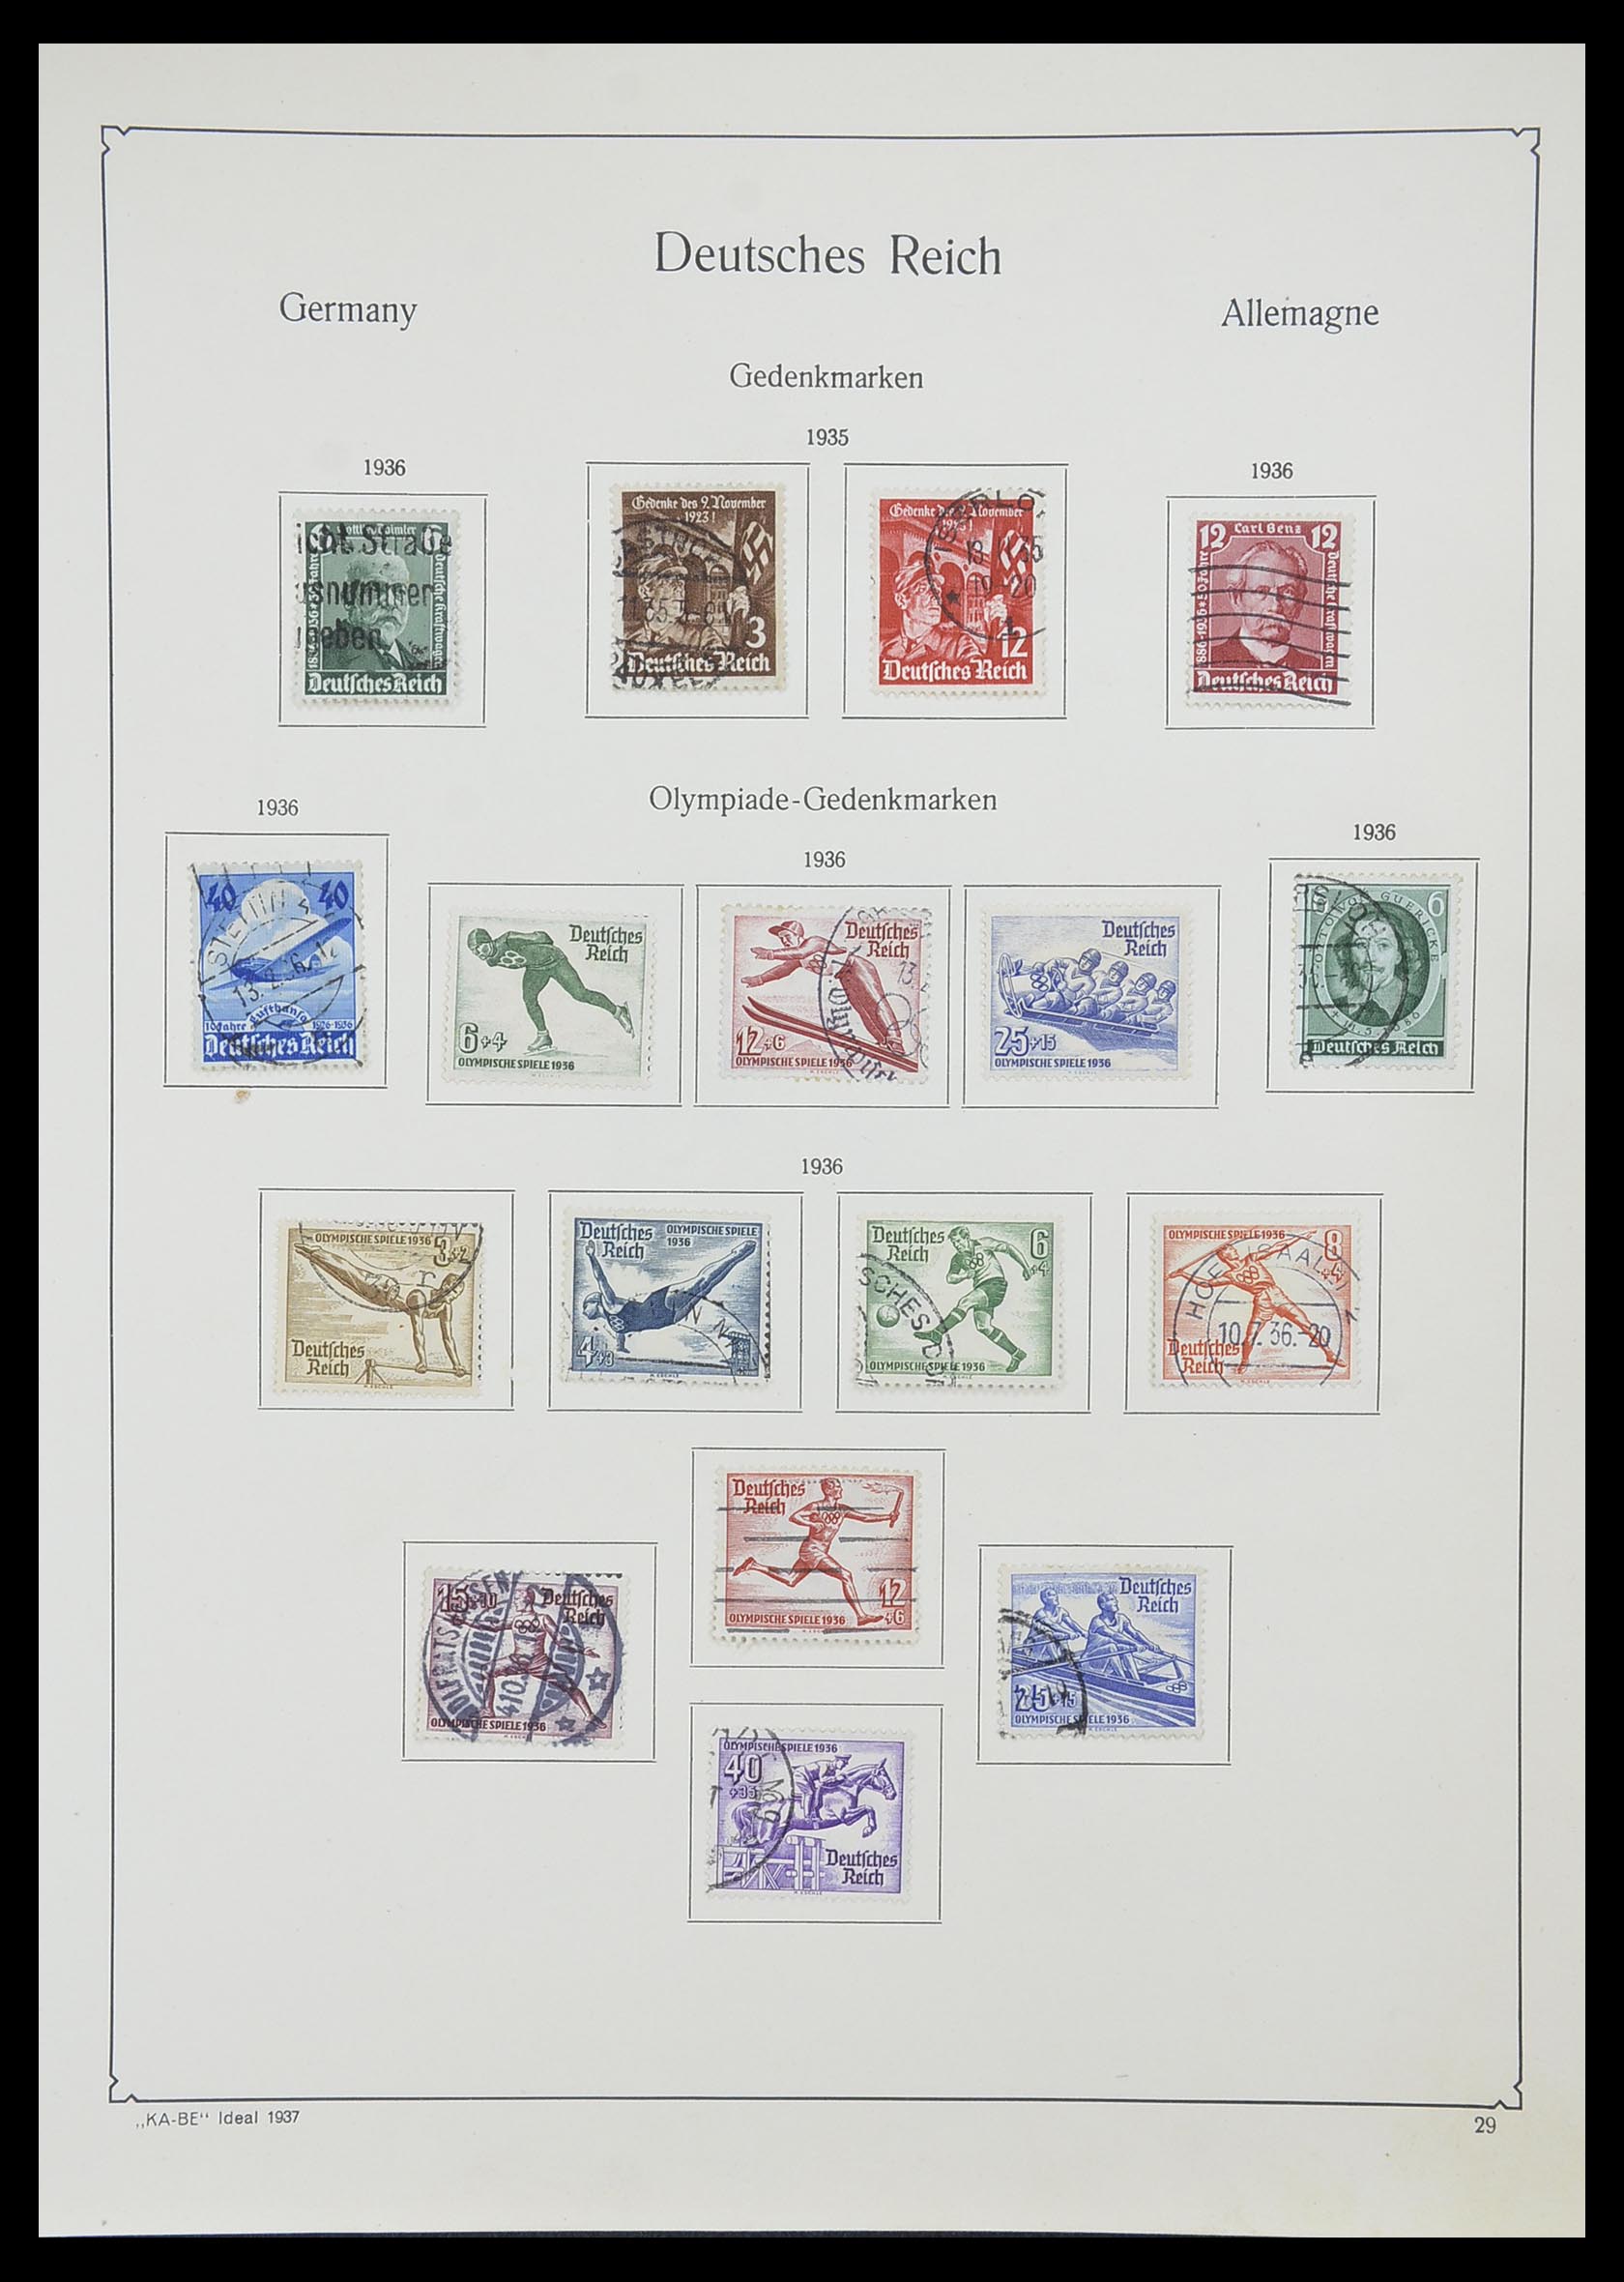 33359 037 - Stamp collection 33359 German Reich 1872-1945.